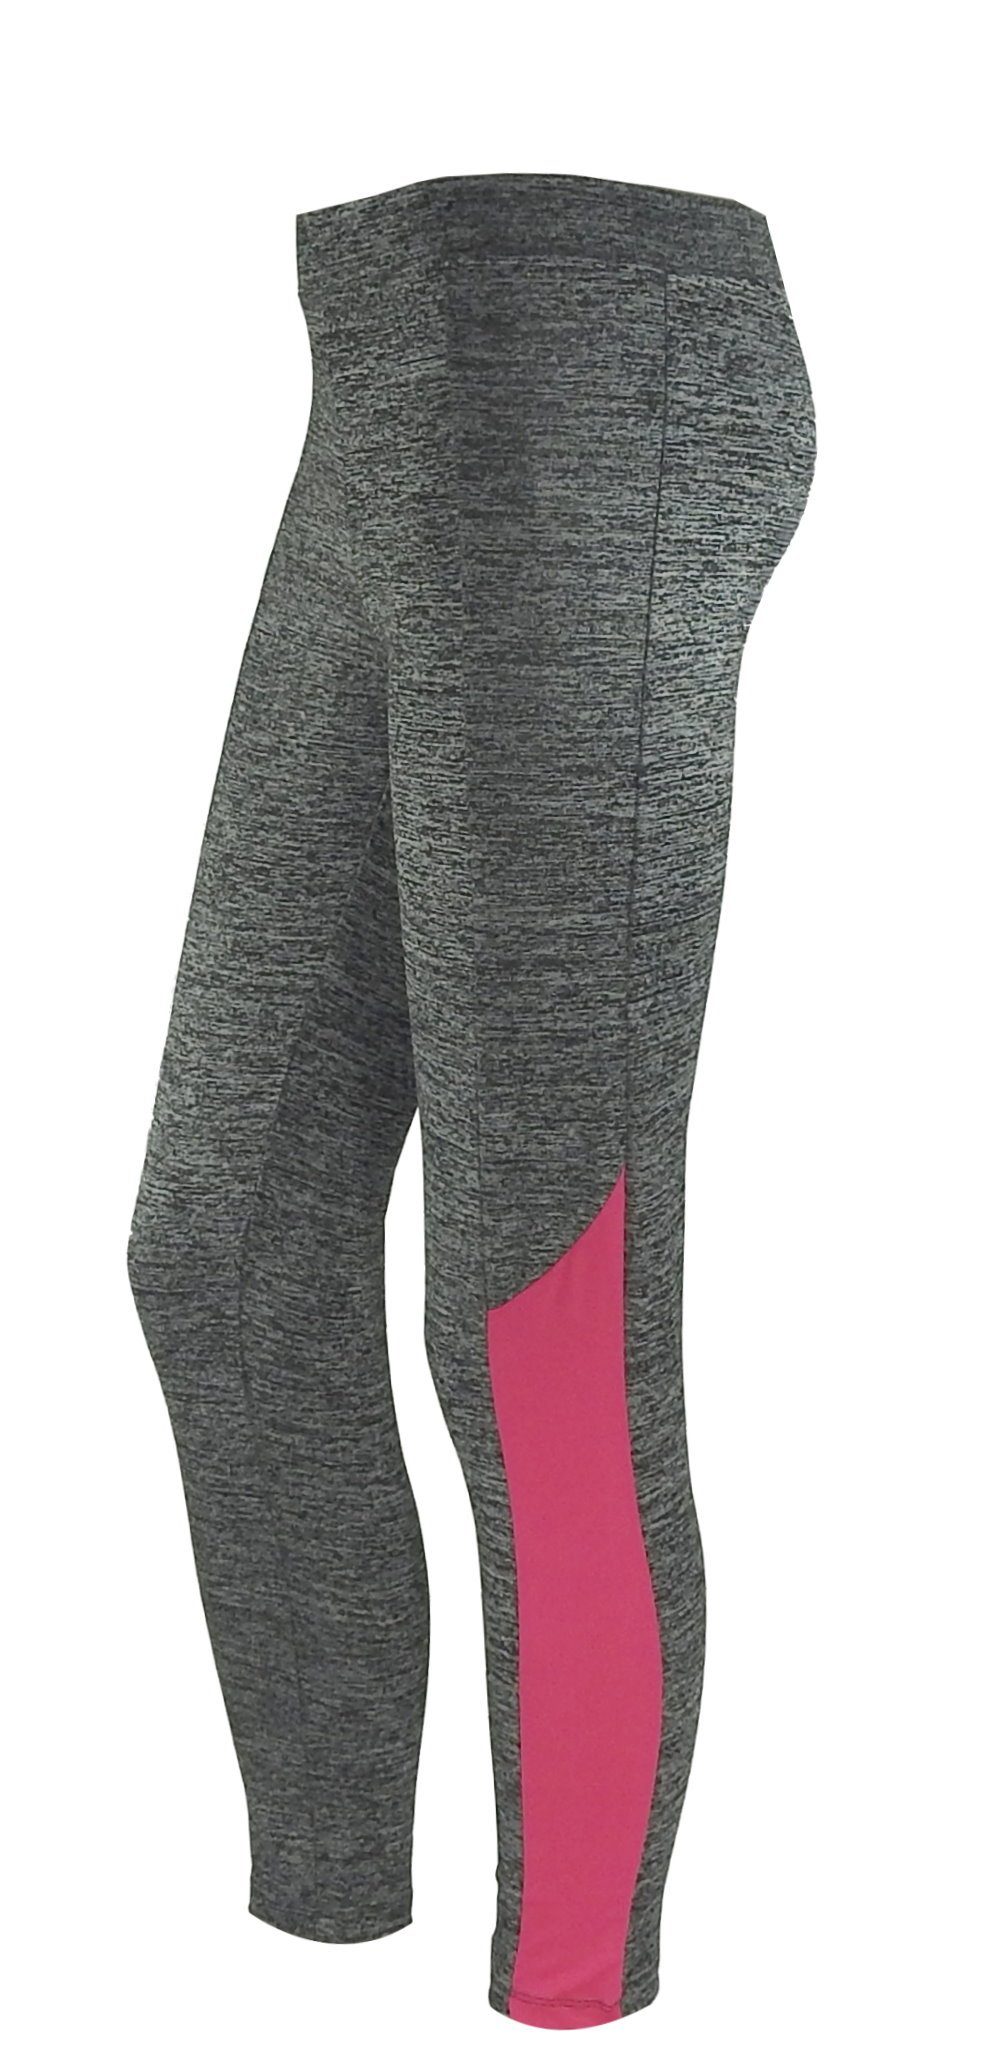 dynamic24 Leggings Damen Sporthose Leggins Jogging grau Yoga Fitness Hosen Trainingshose